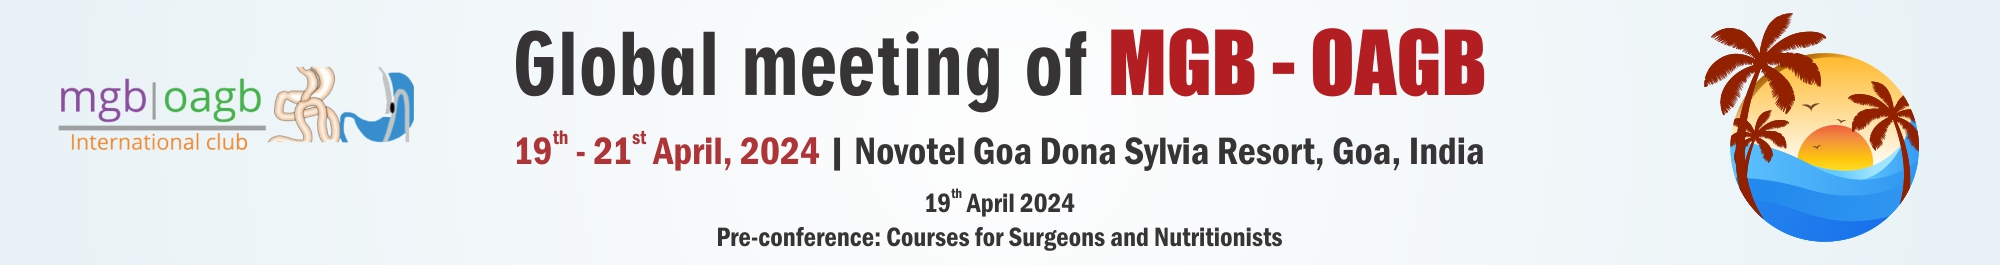 MGB OAGB 2024, Goa